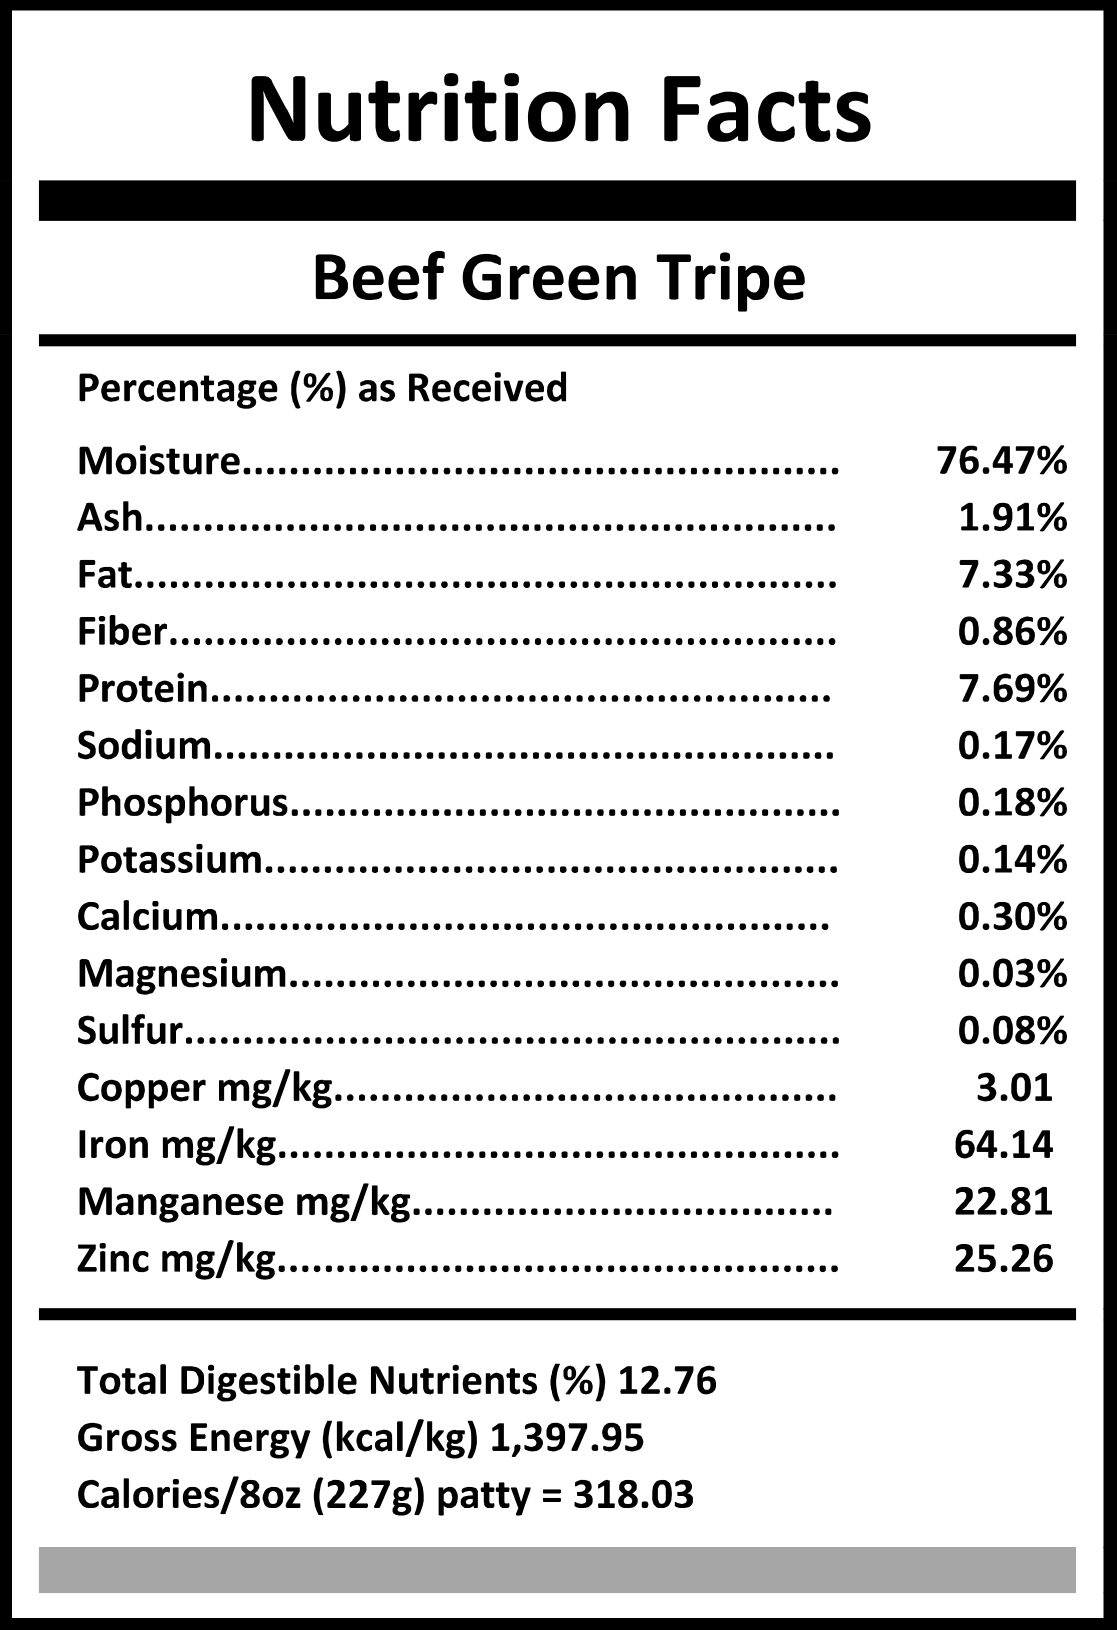 Beef Green Tripe